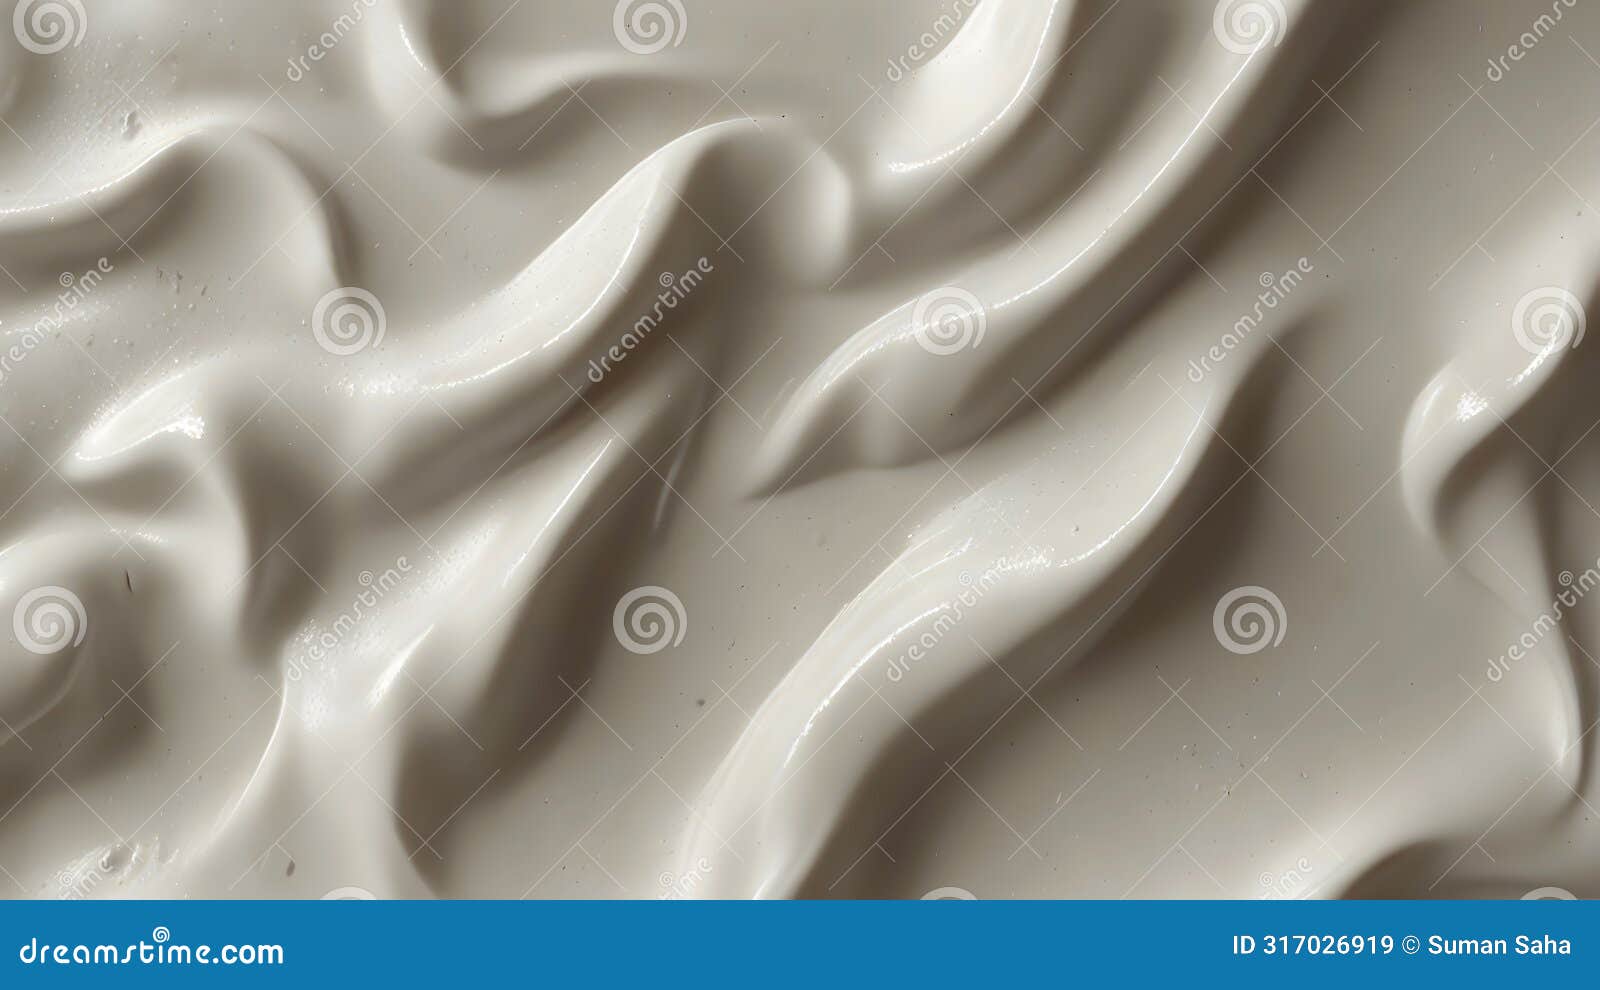 skin care beauty white cream moisturiser smear smudge balm foam texture background